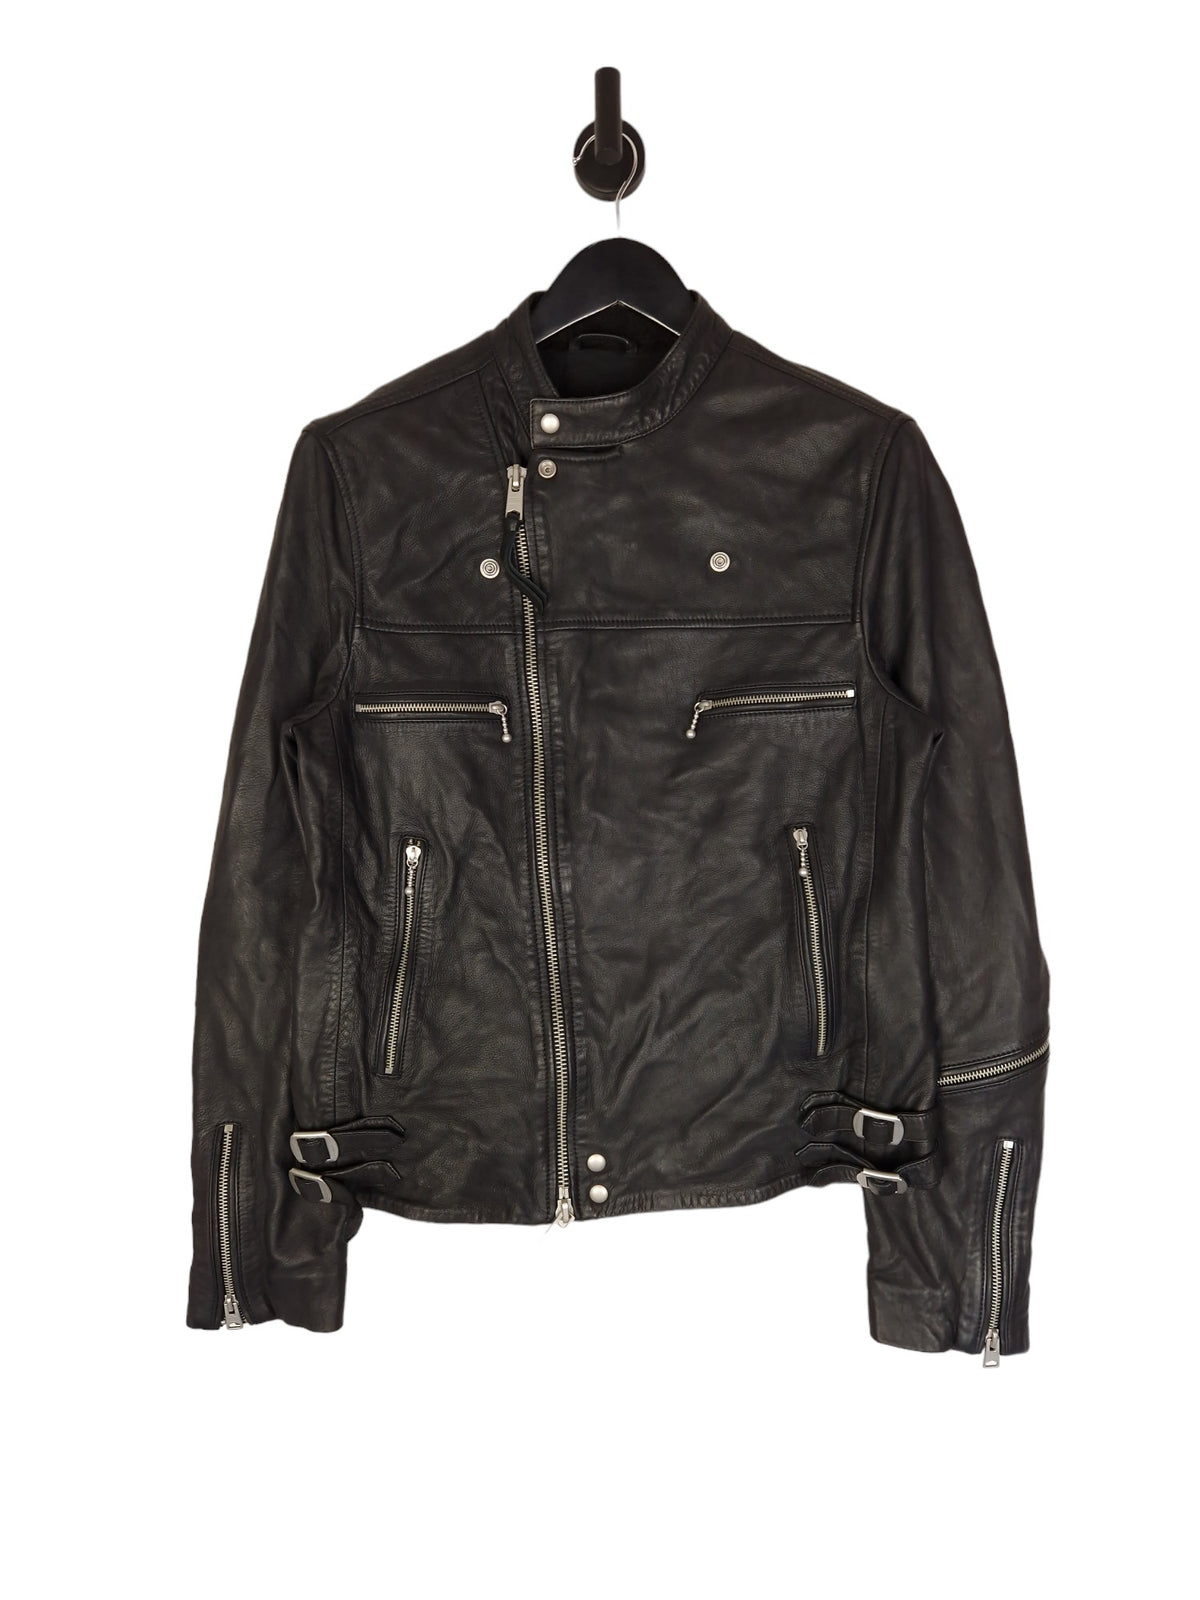 All Saints Leather Jacket - Size Medium